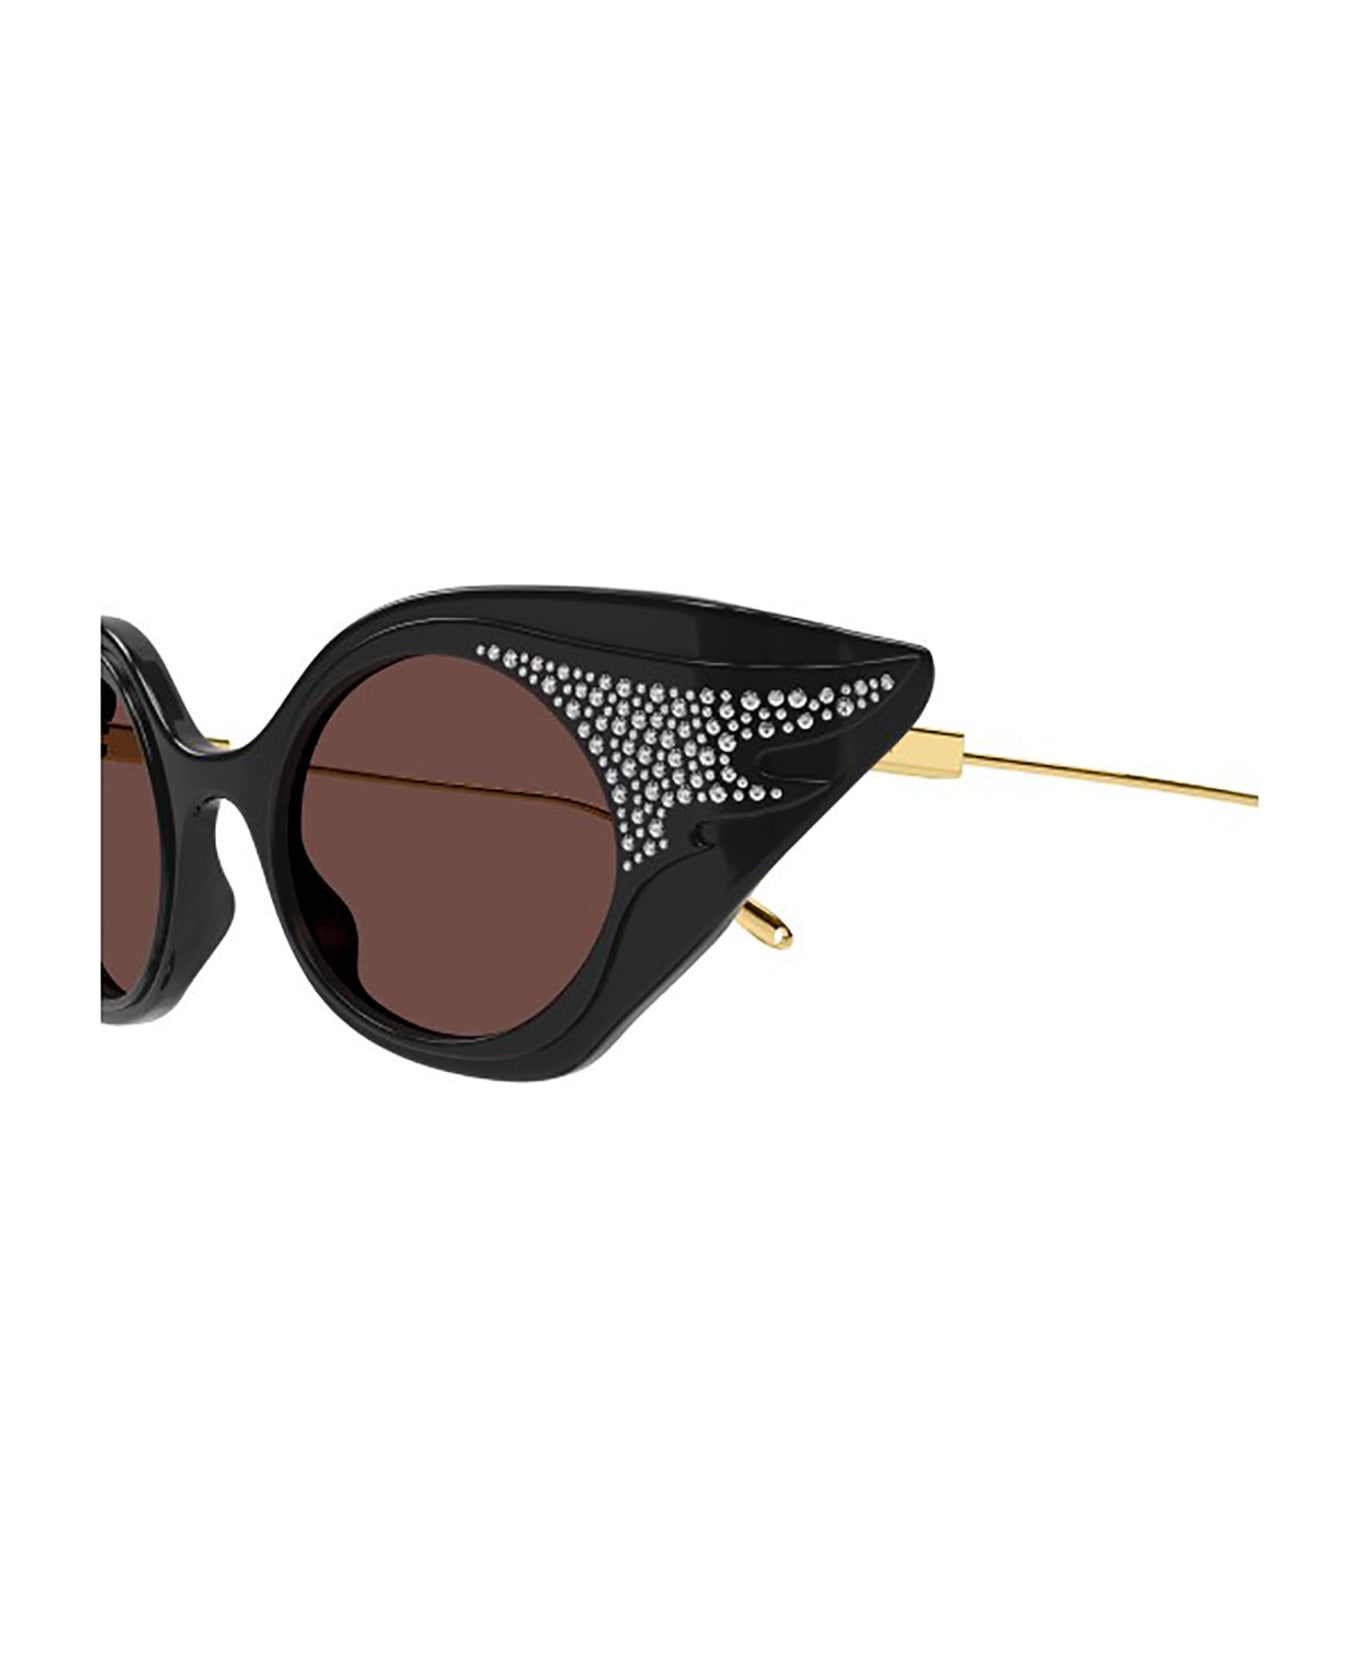 Gucci Eyewear Gg1327s Sunglasses - 001 black gold brown サングラス